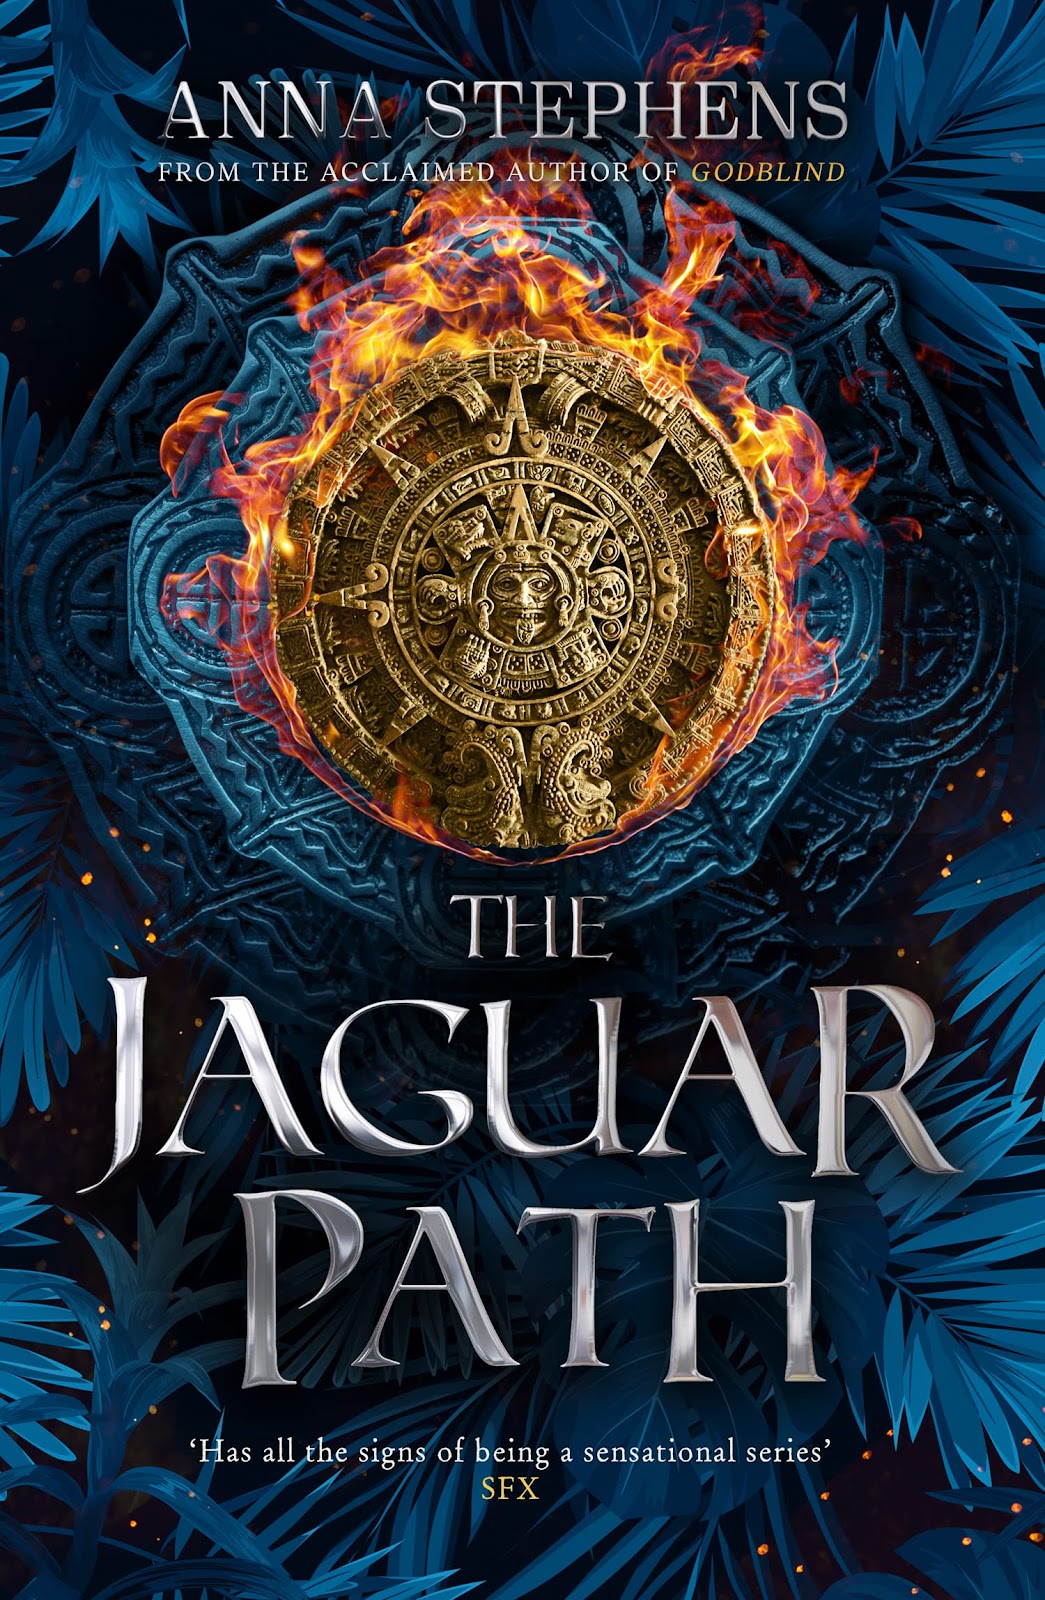 The Jaguar Path by Anna Stephens